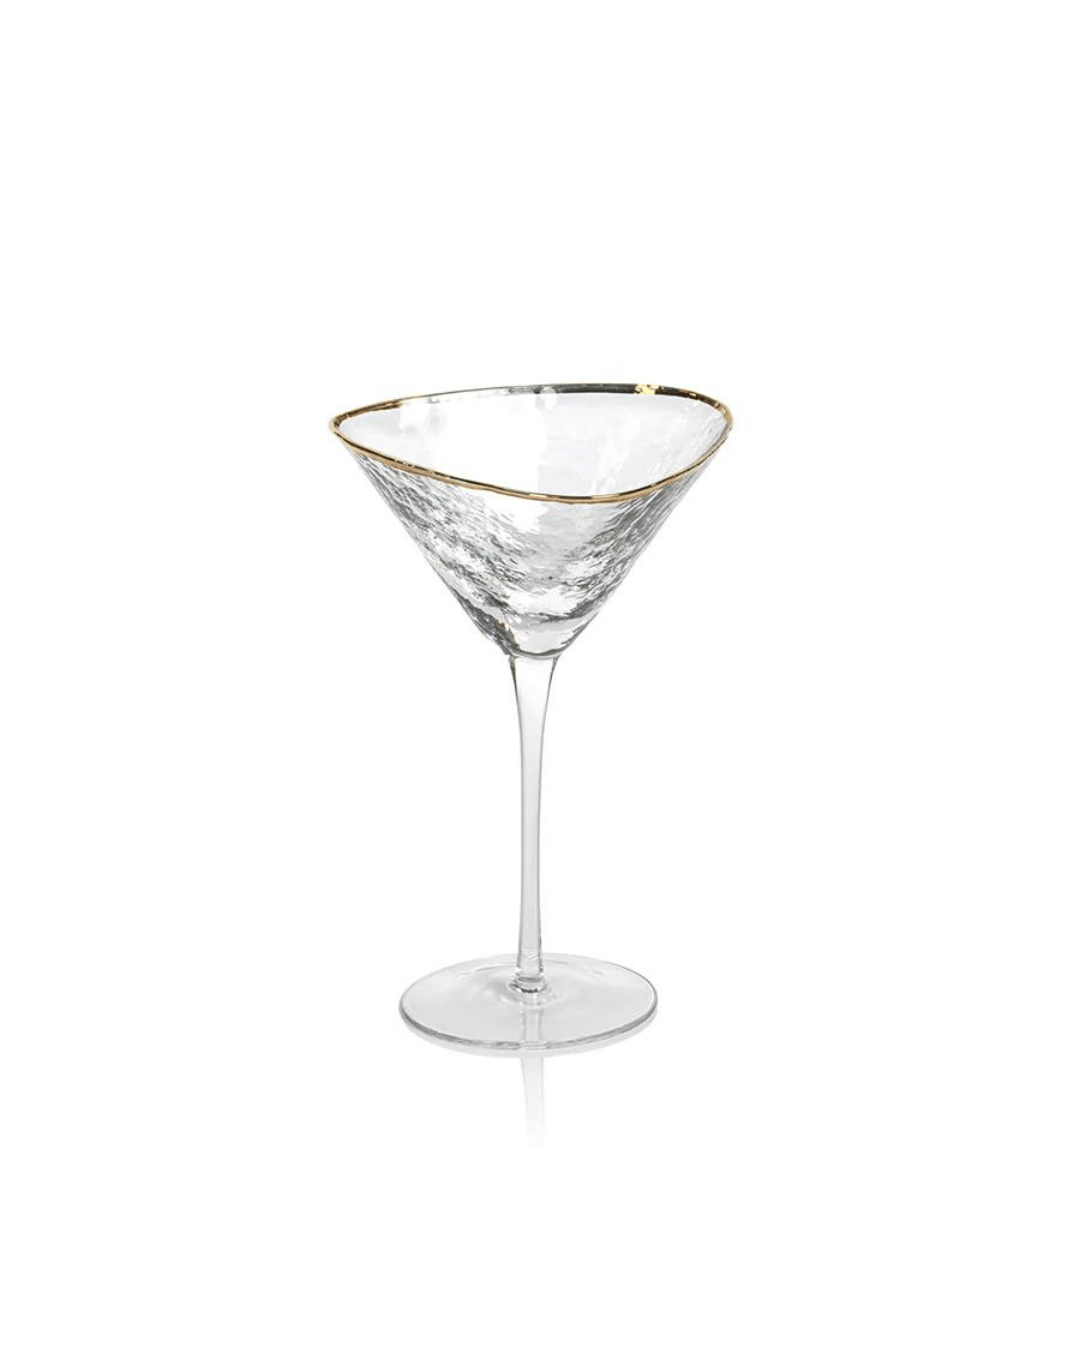 Aperitivo Triangular Martini Glass - Clear with Gold Rim